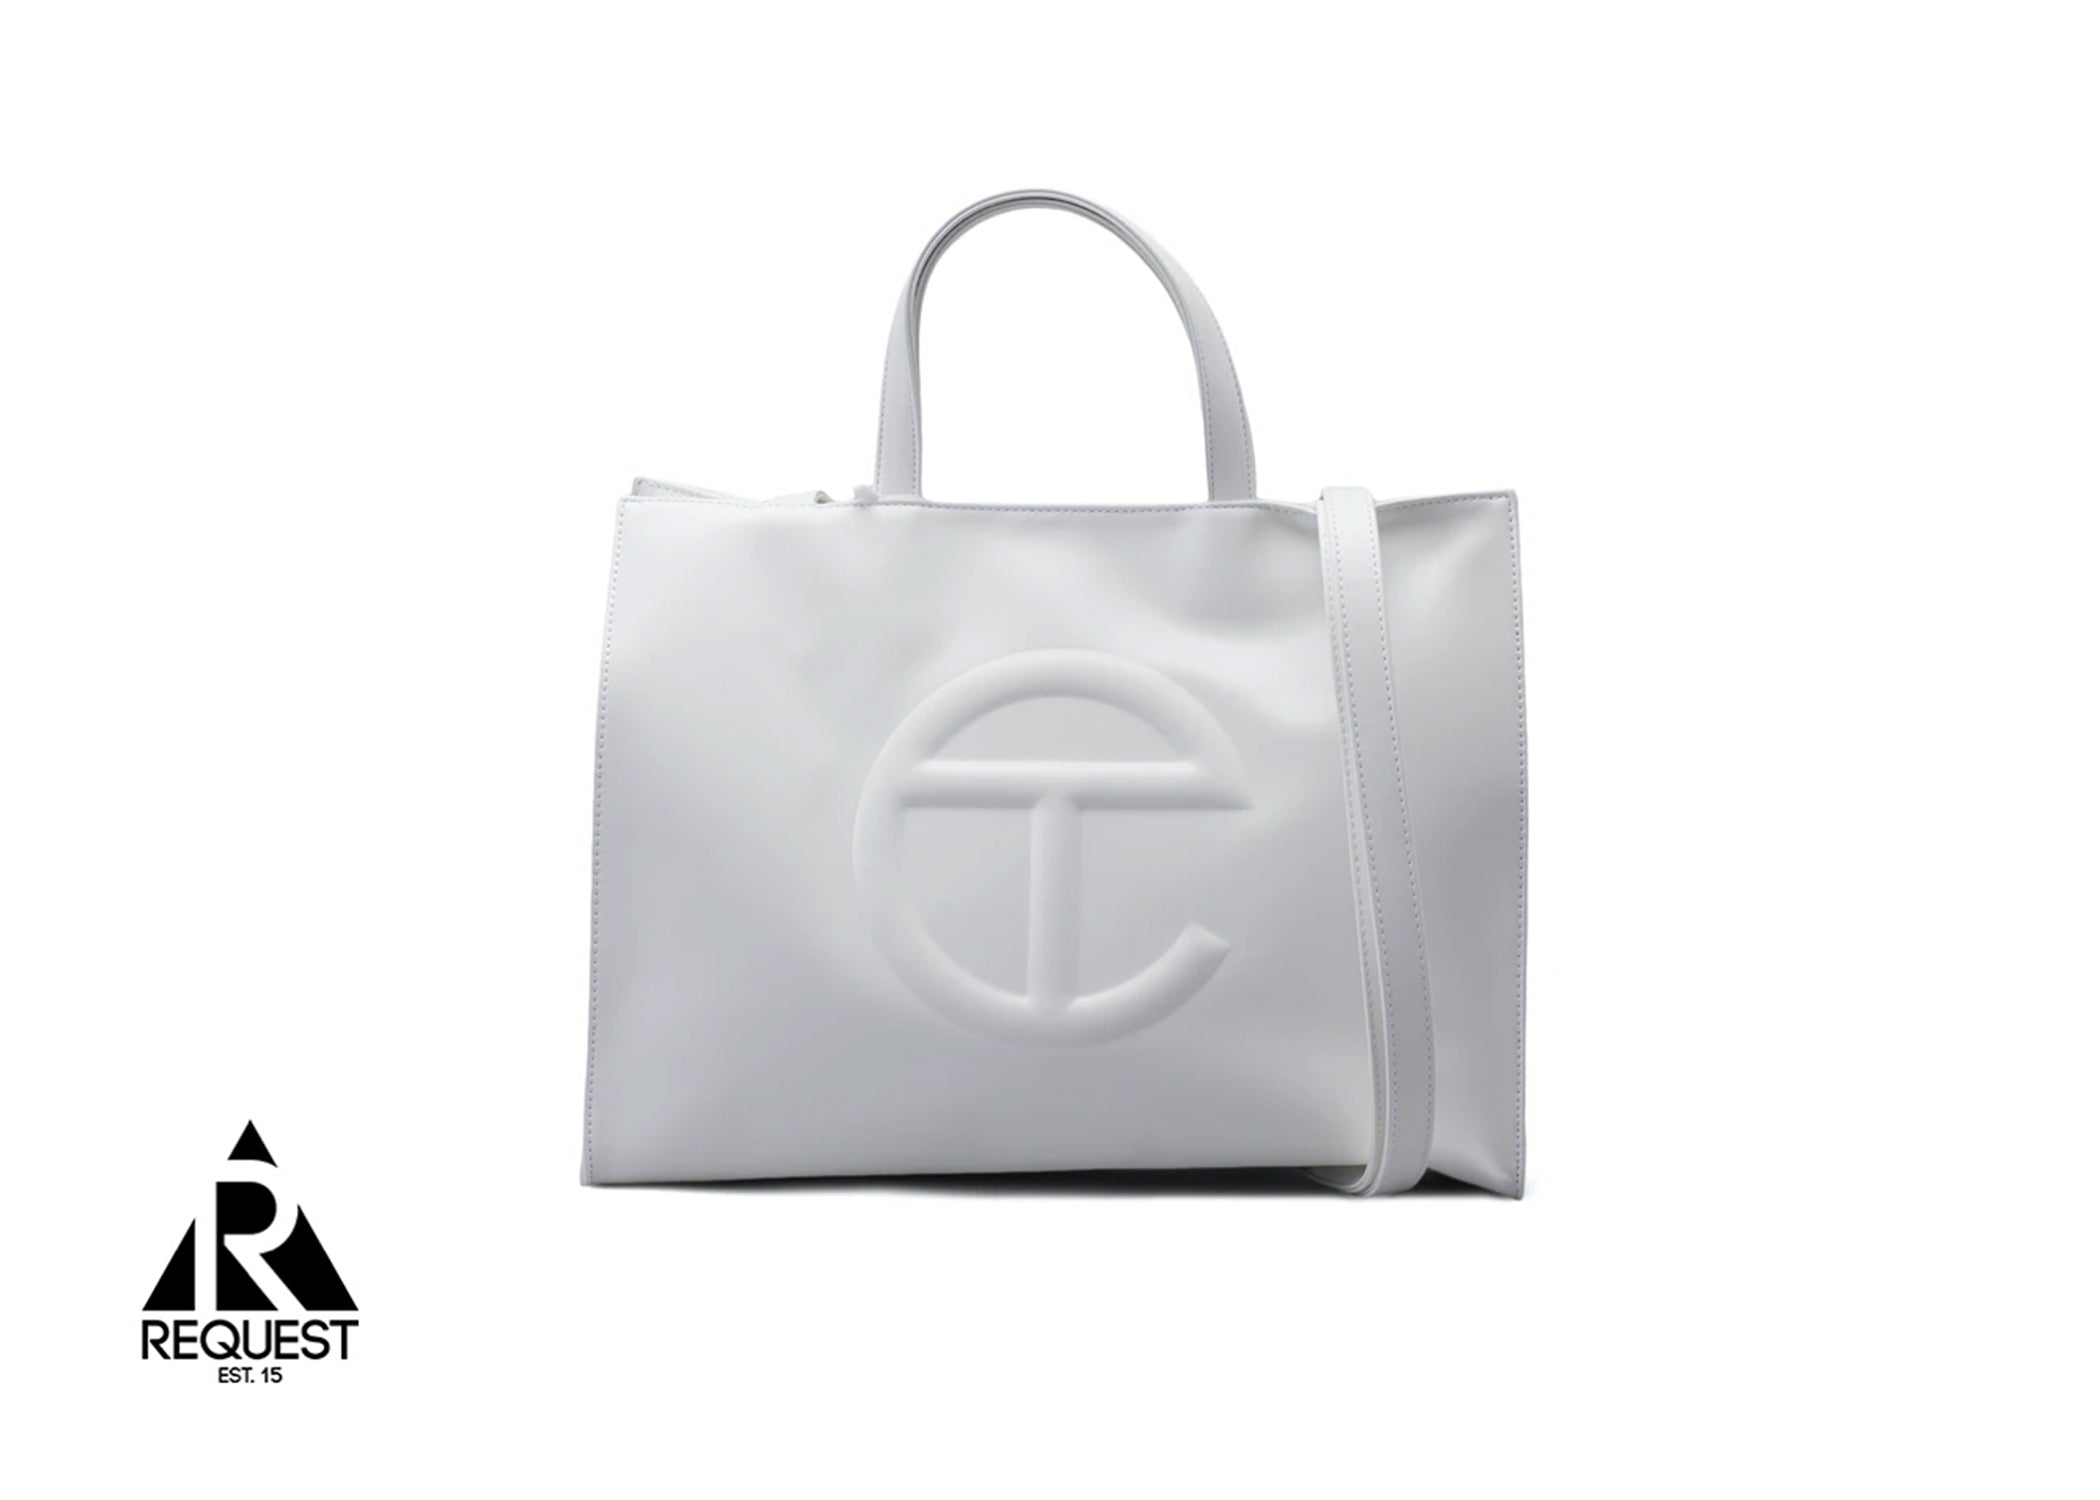 White Telfar Circle Bag for Sale in Atlanta, GA - OfferUp